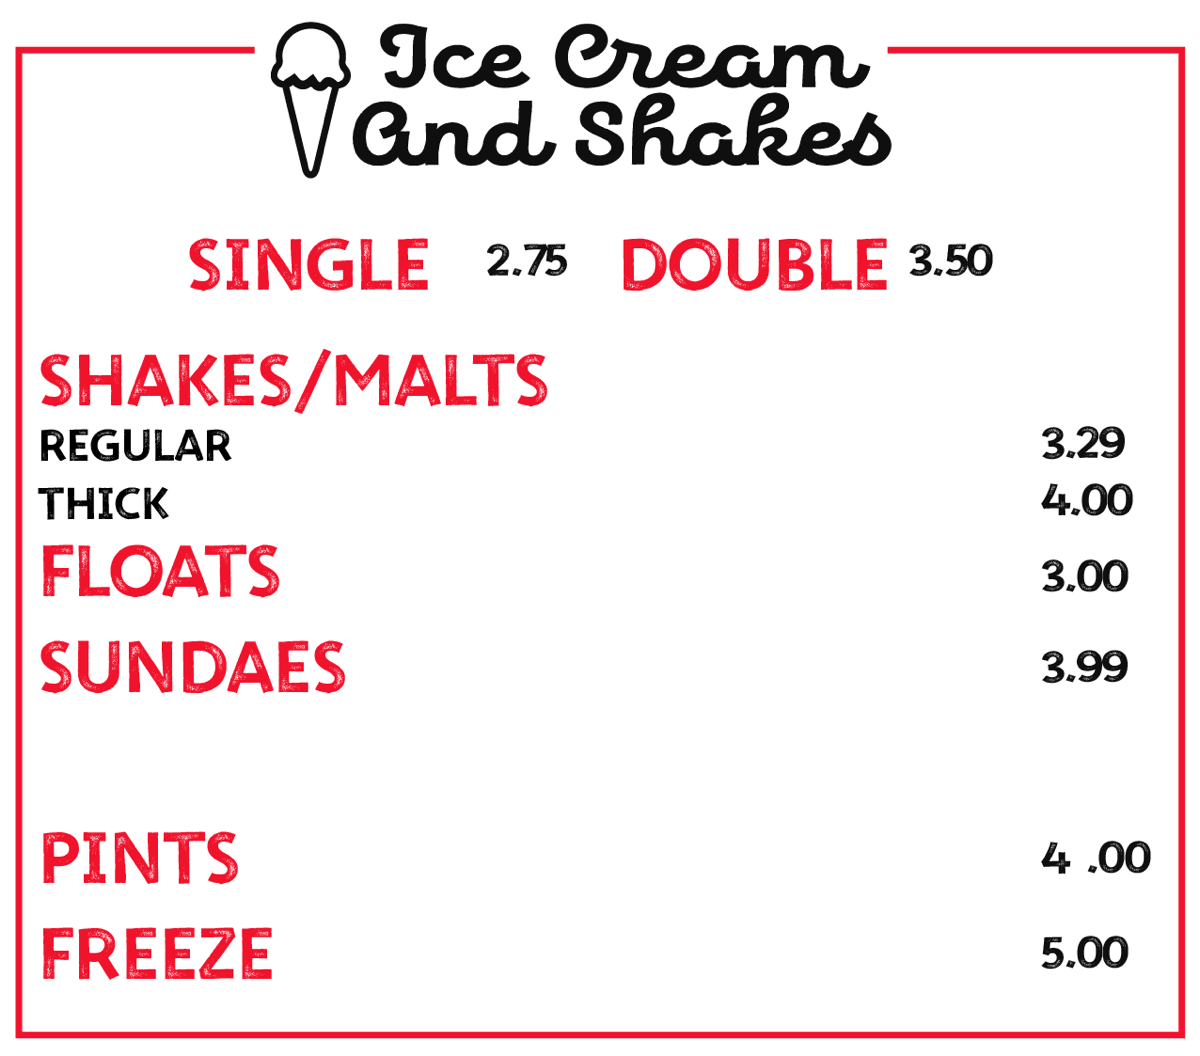 Ice Cream and shakes